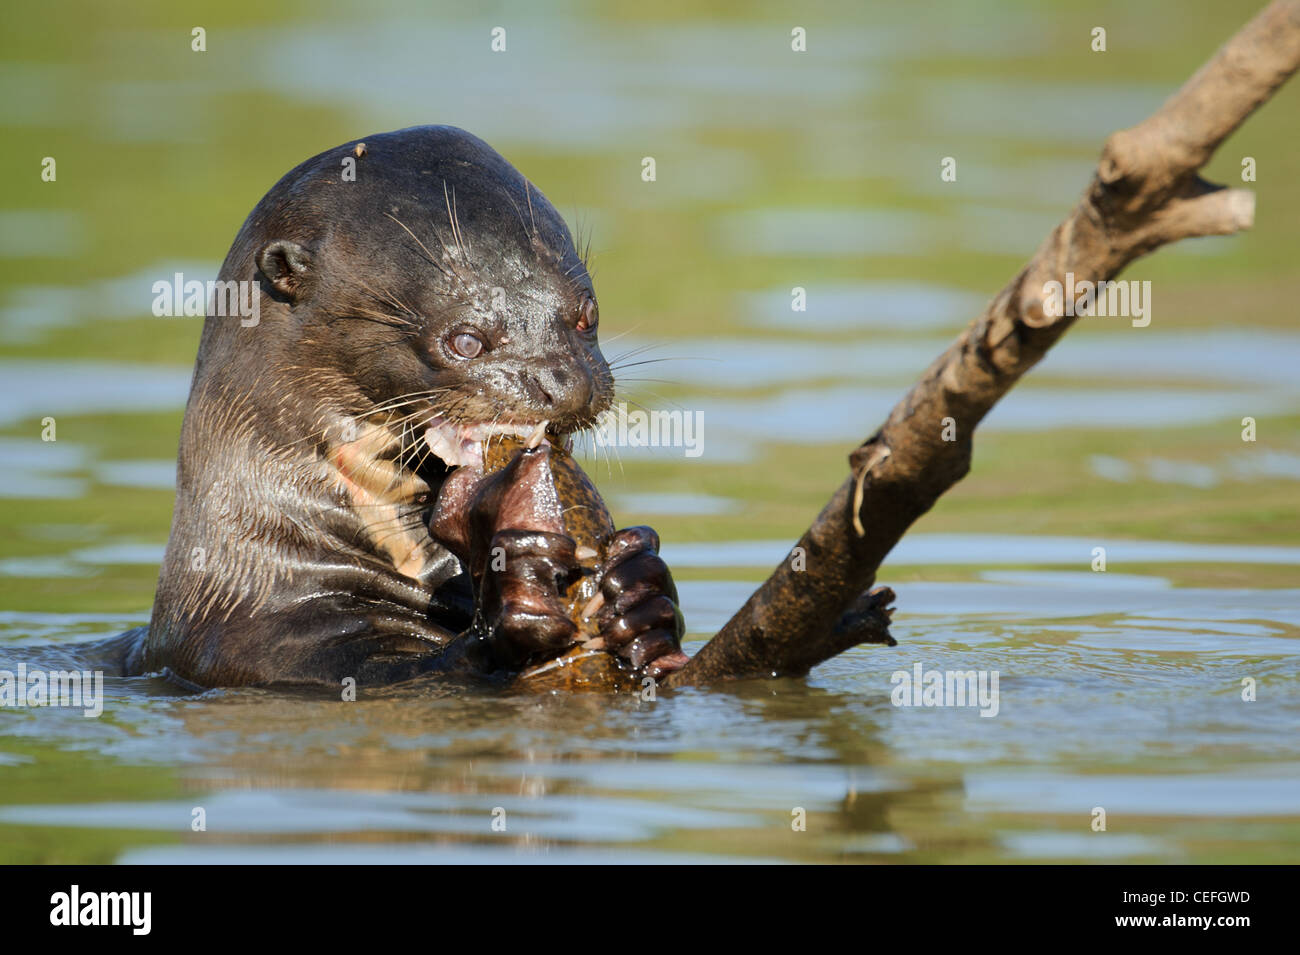 A wild Giant River Otter feeding on fish Stock Photo - Alamy